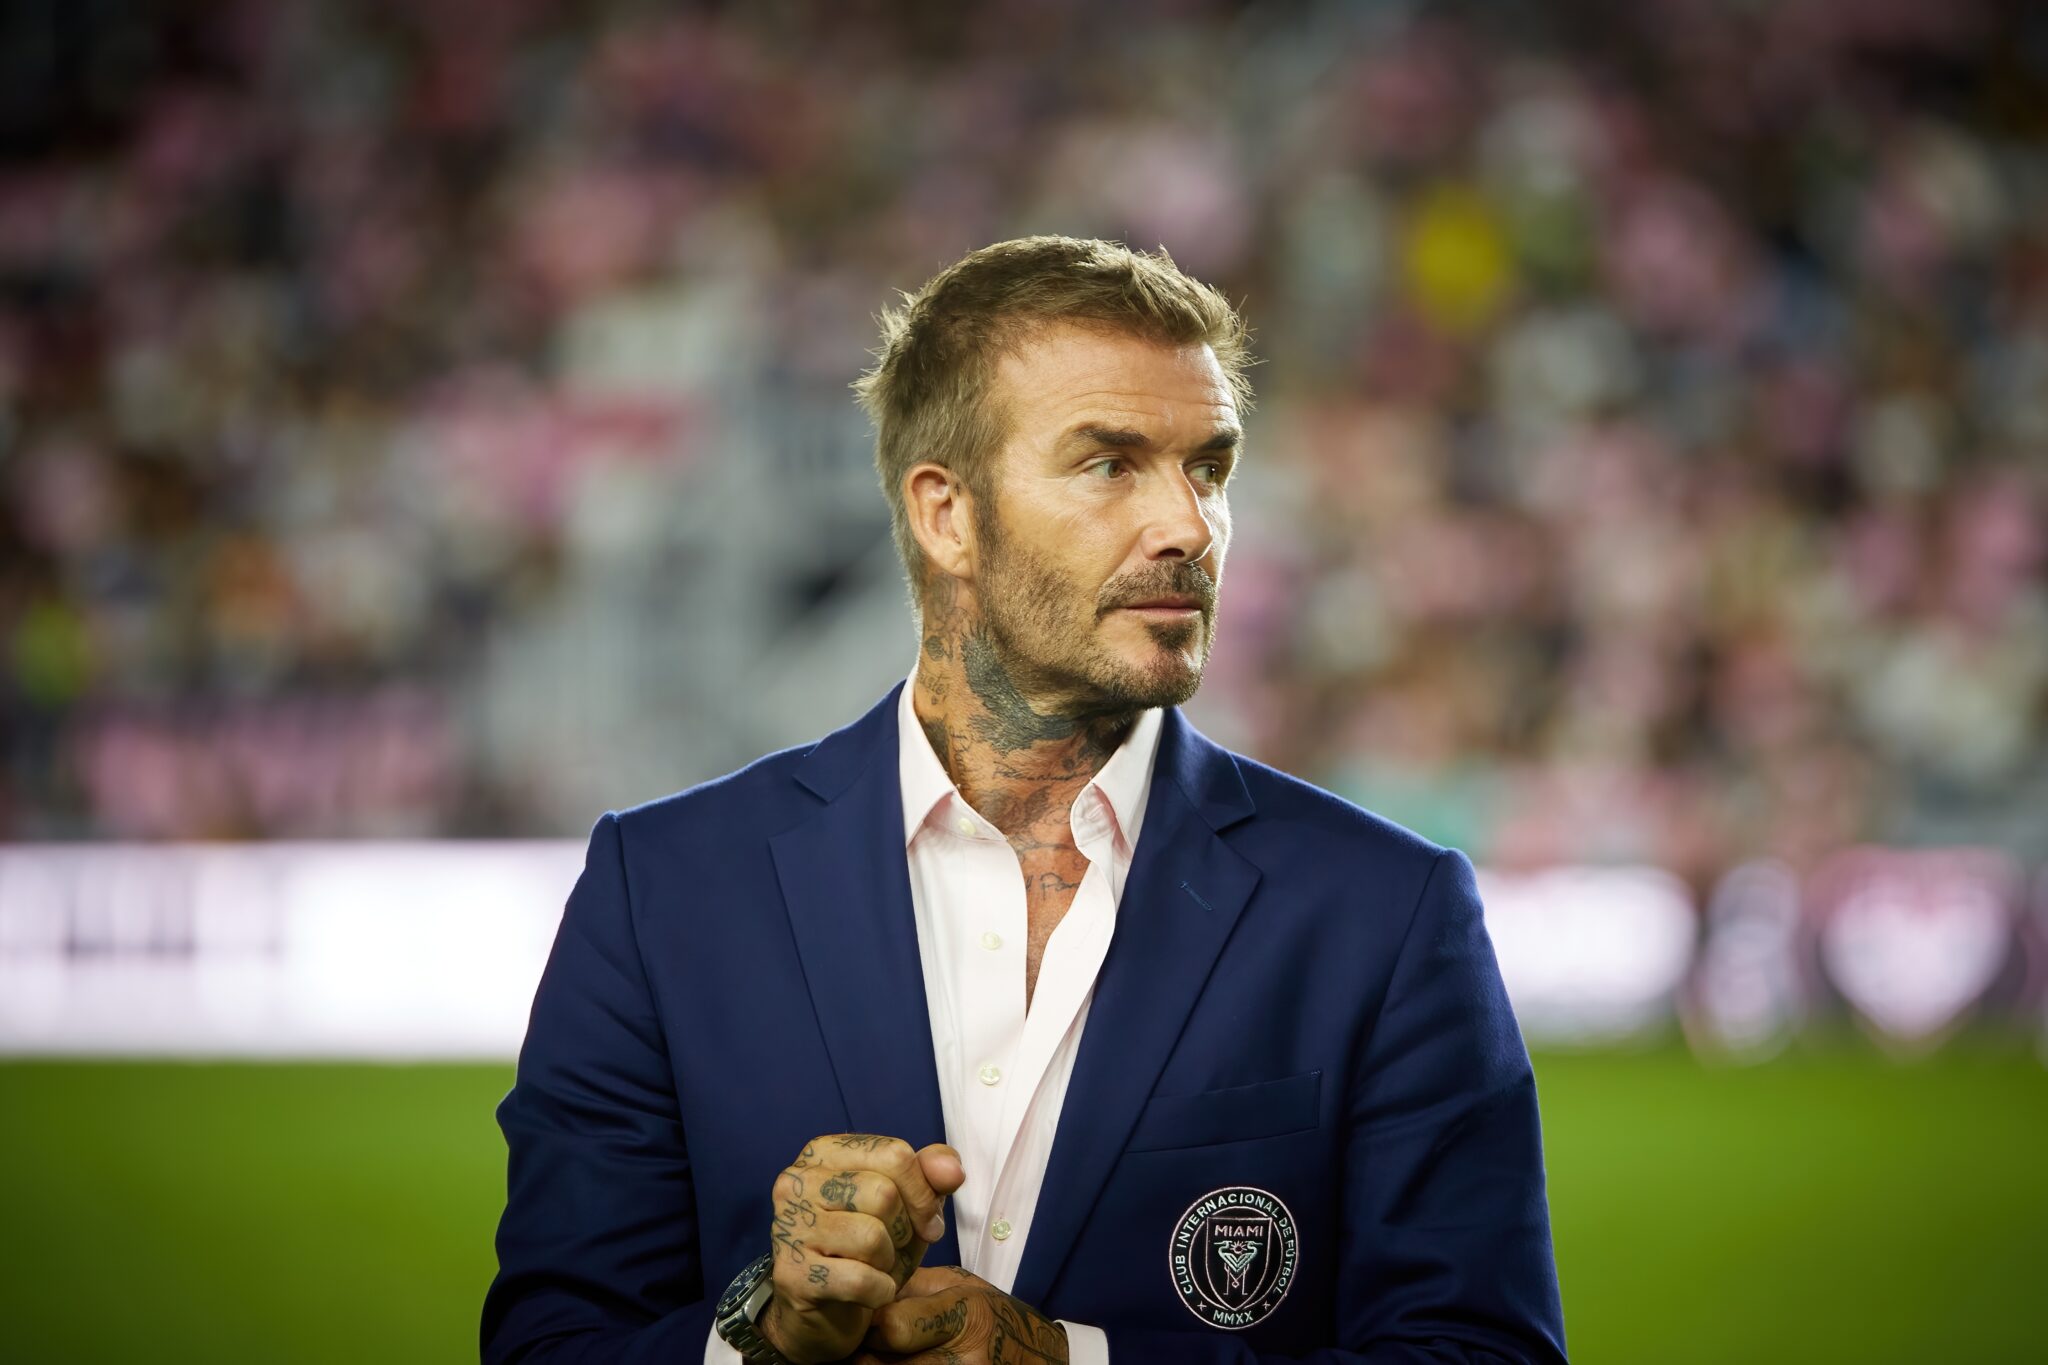 David Beckham walks on a football field in a suit